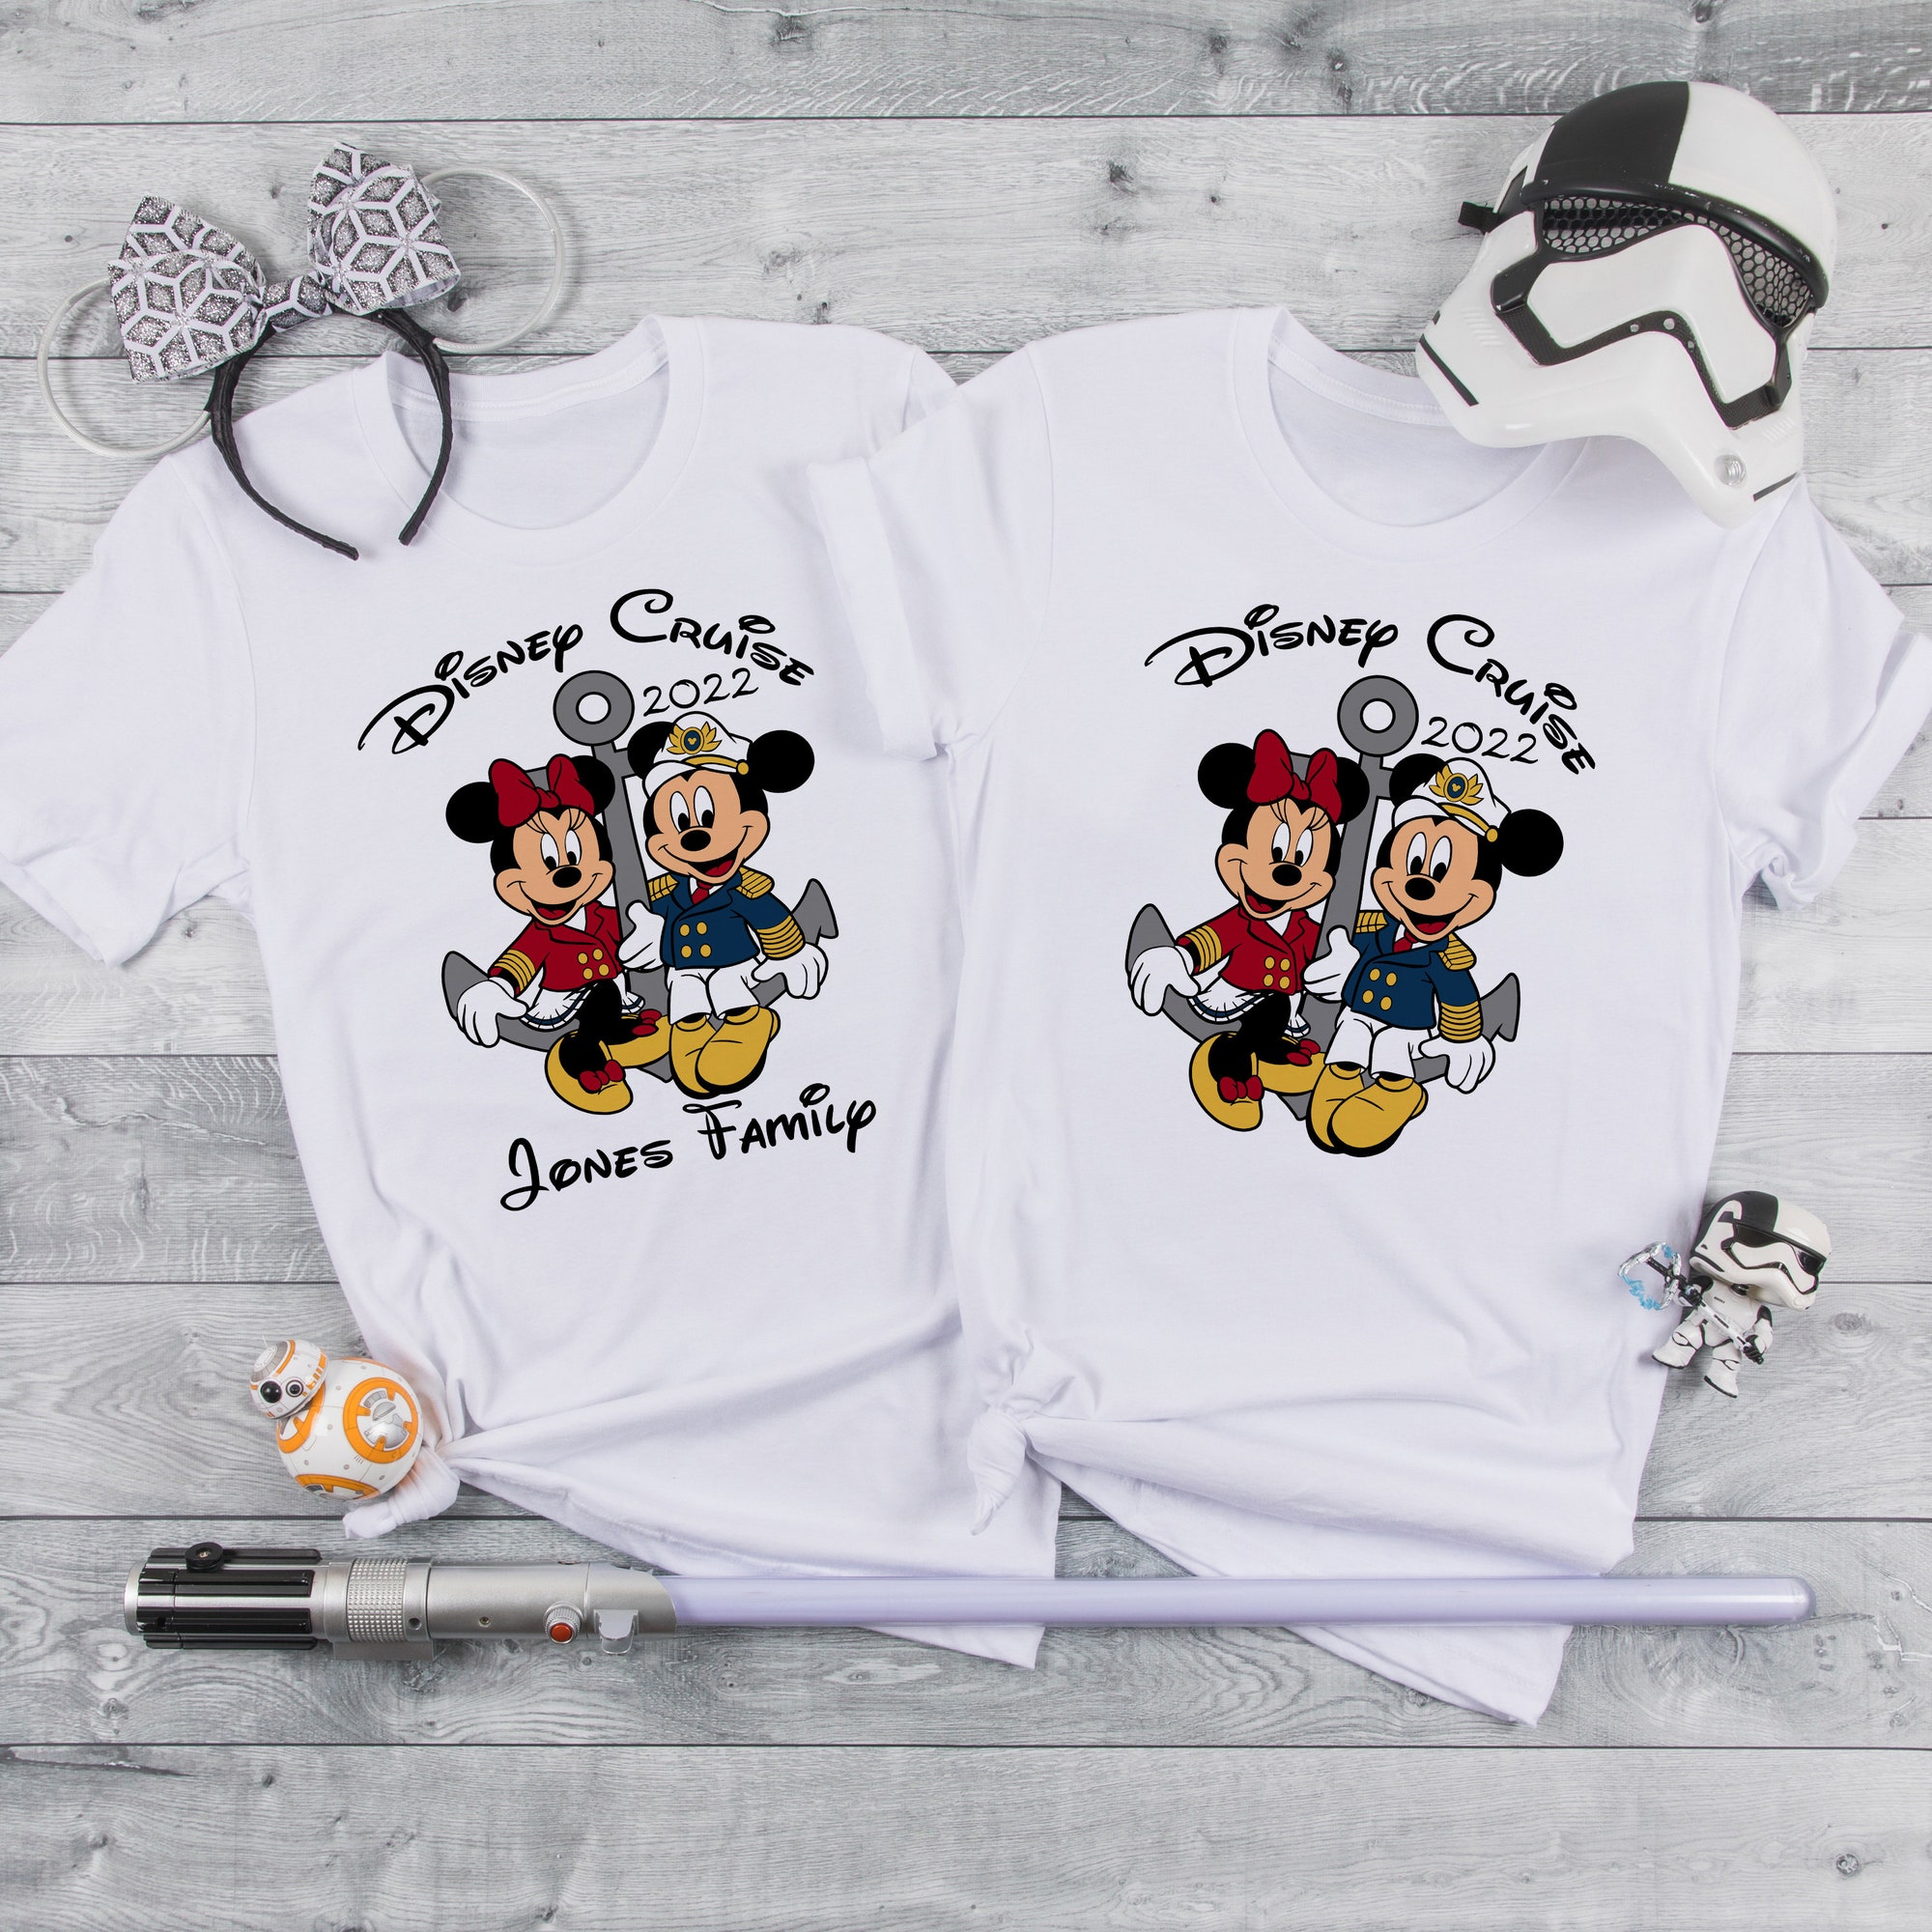 Disney Cruise Shirts 2022 | Disney Family Shirts 2022 | Matching Disney Shirts | Disney Trip 2022